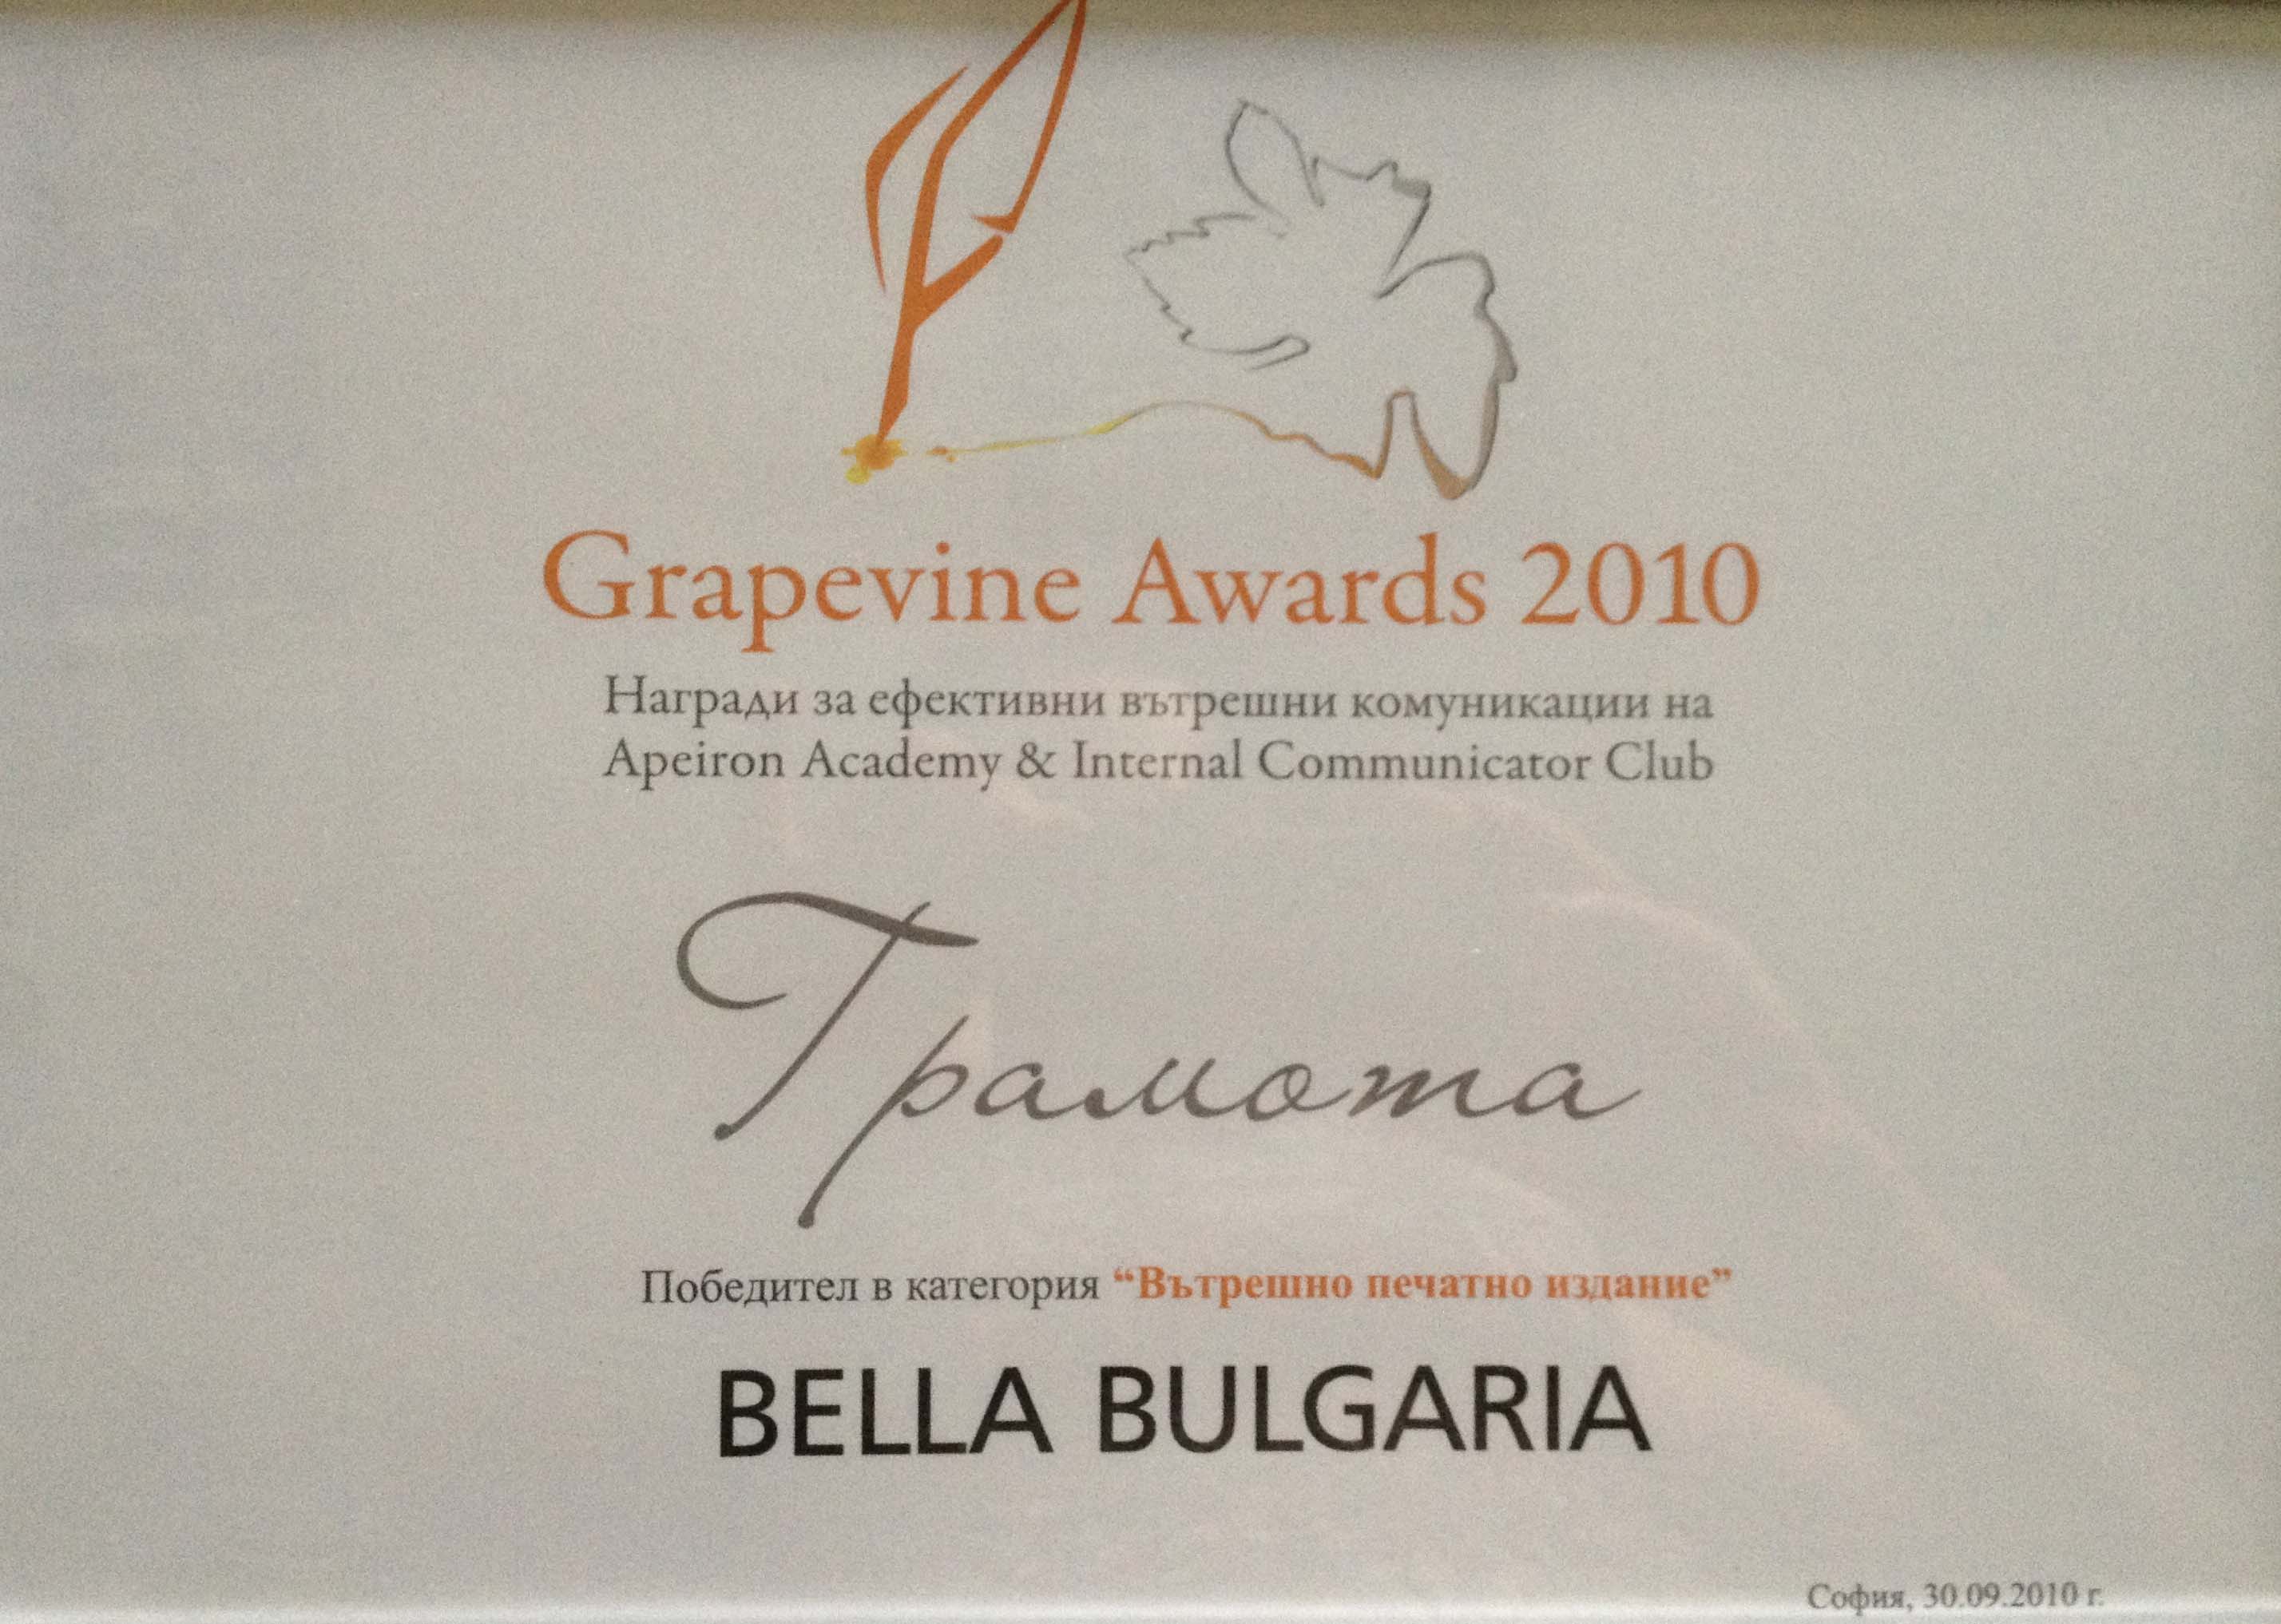 BELLA Inside is №1 internal magazine (Grapevine Awards, 2010)